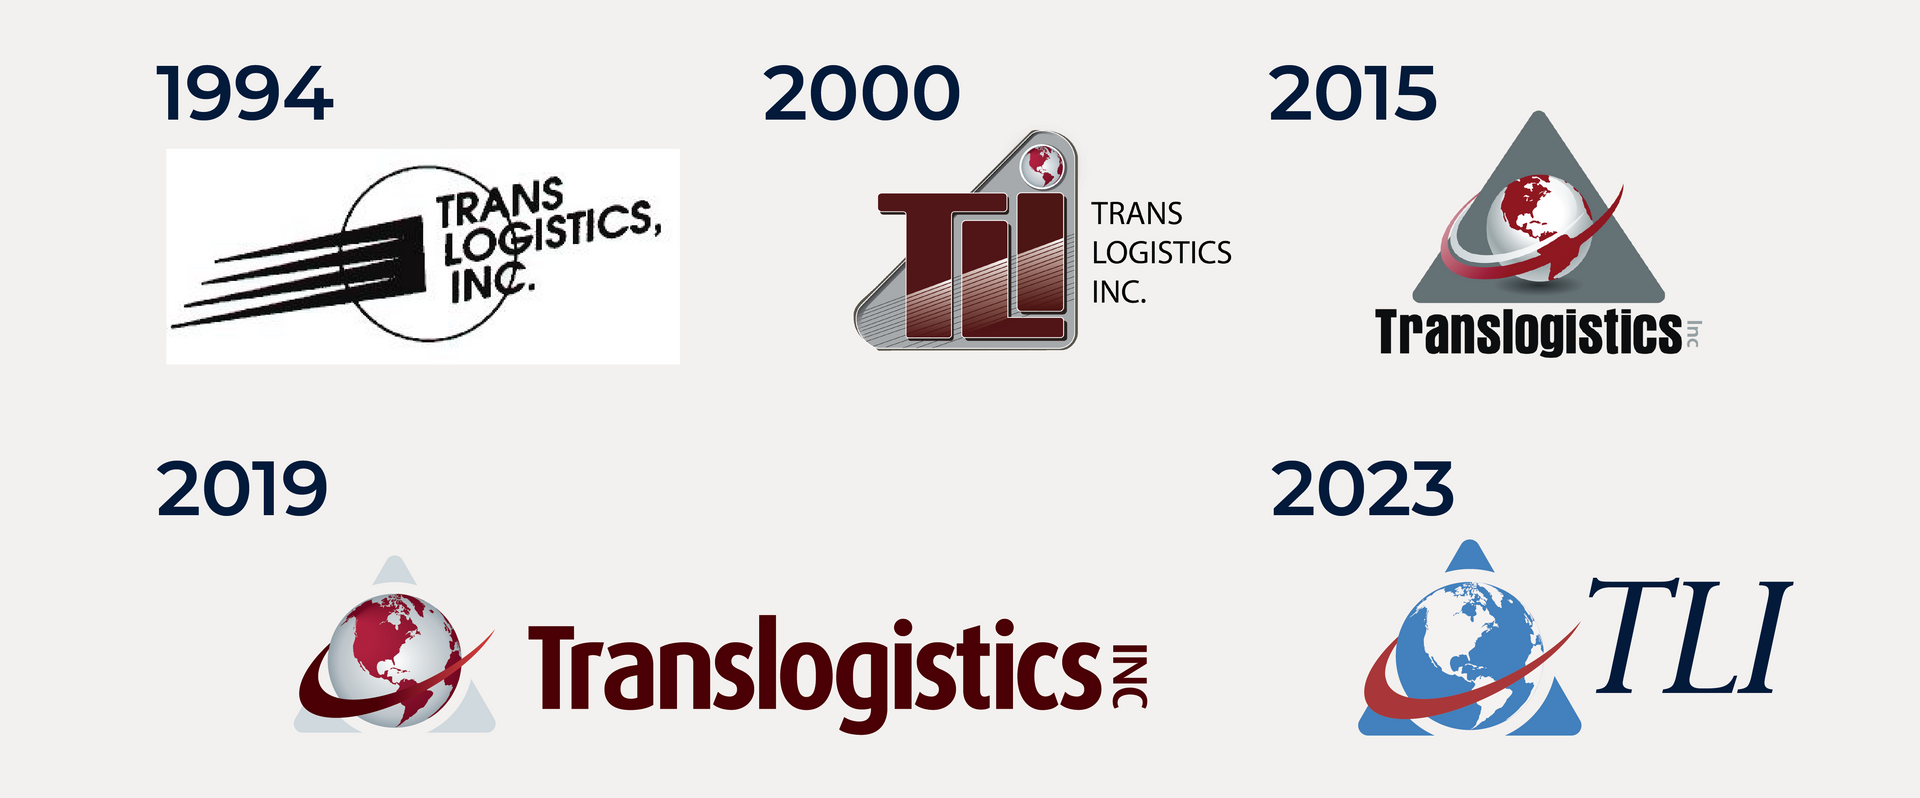 Translogistics Logo History